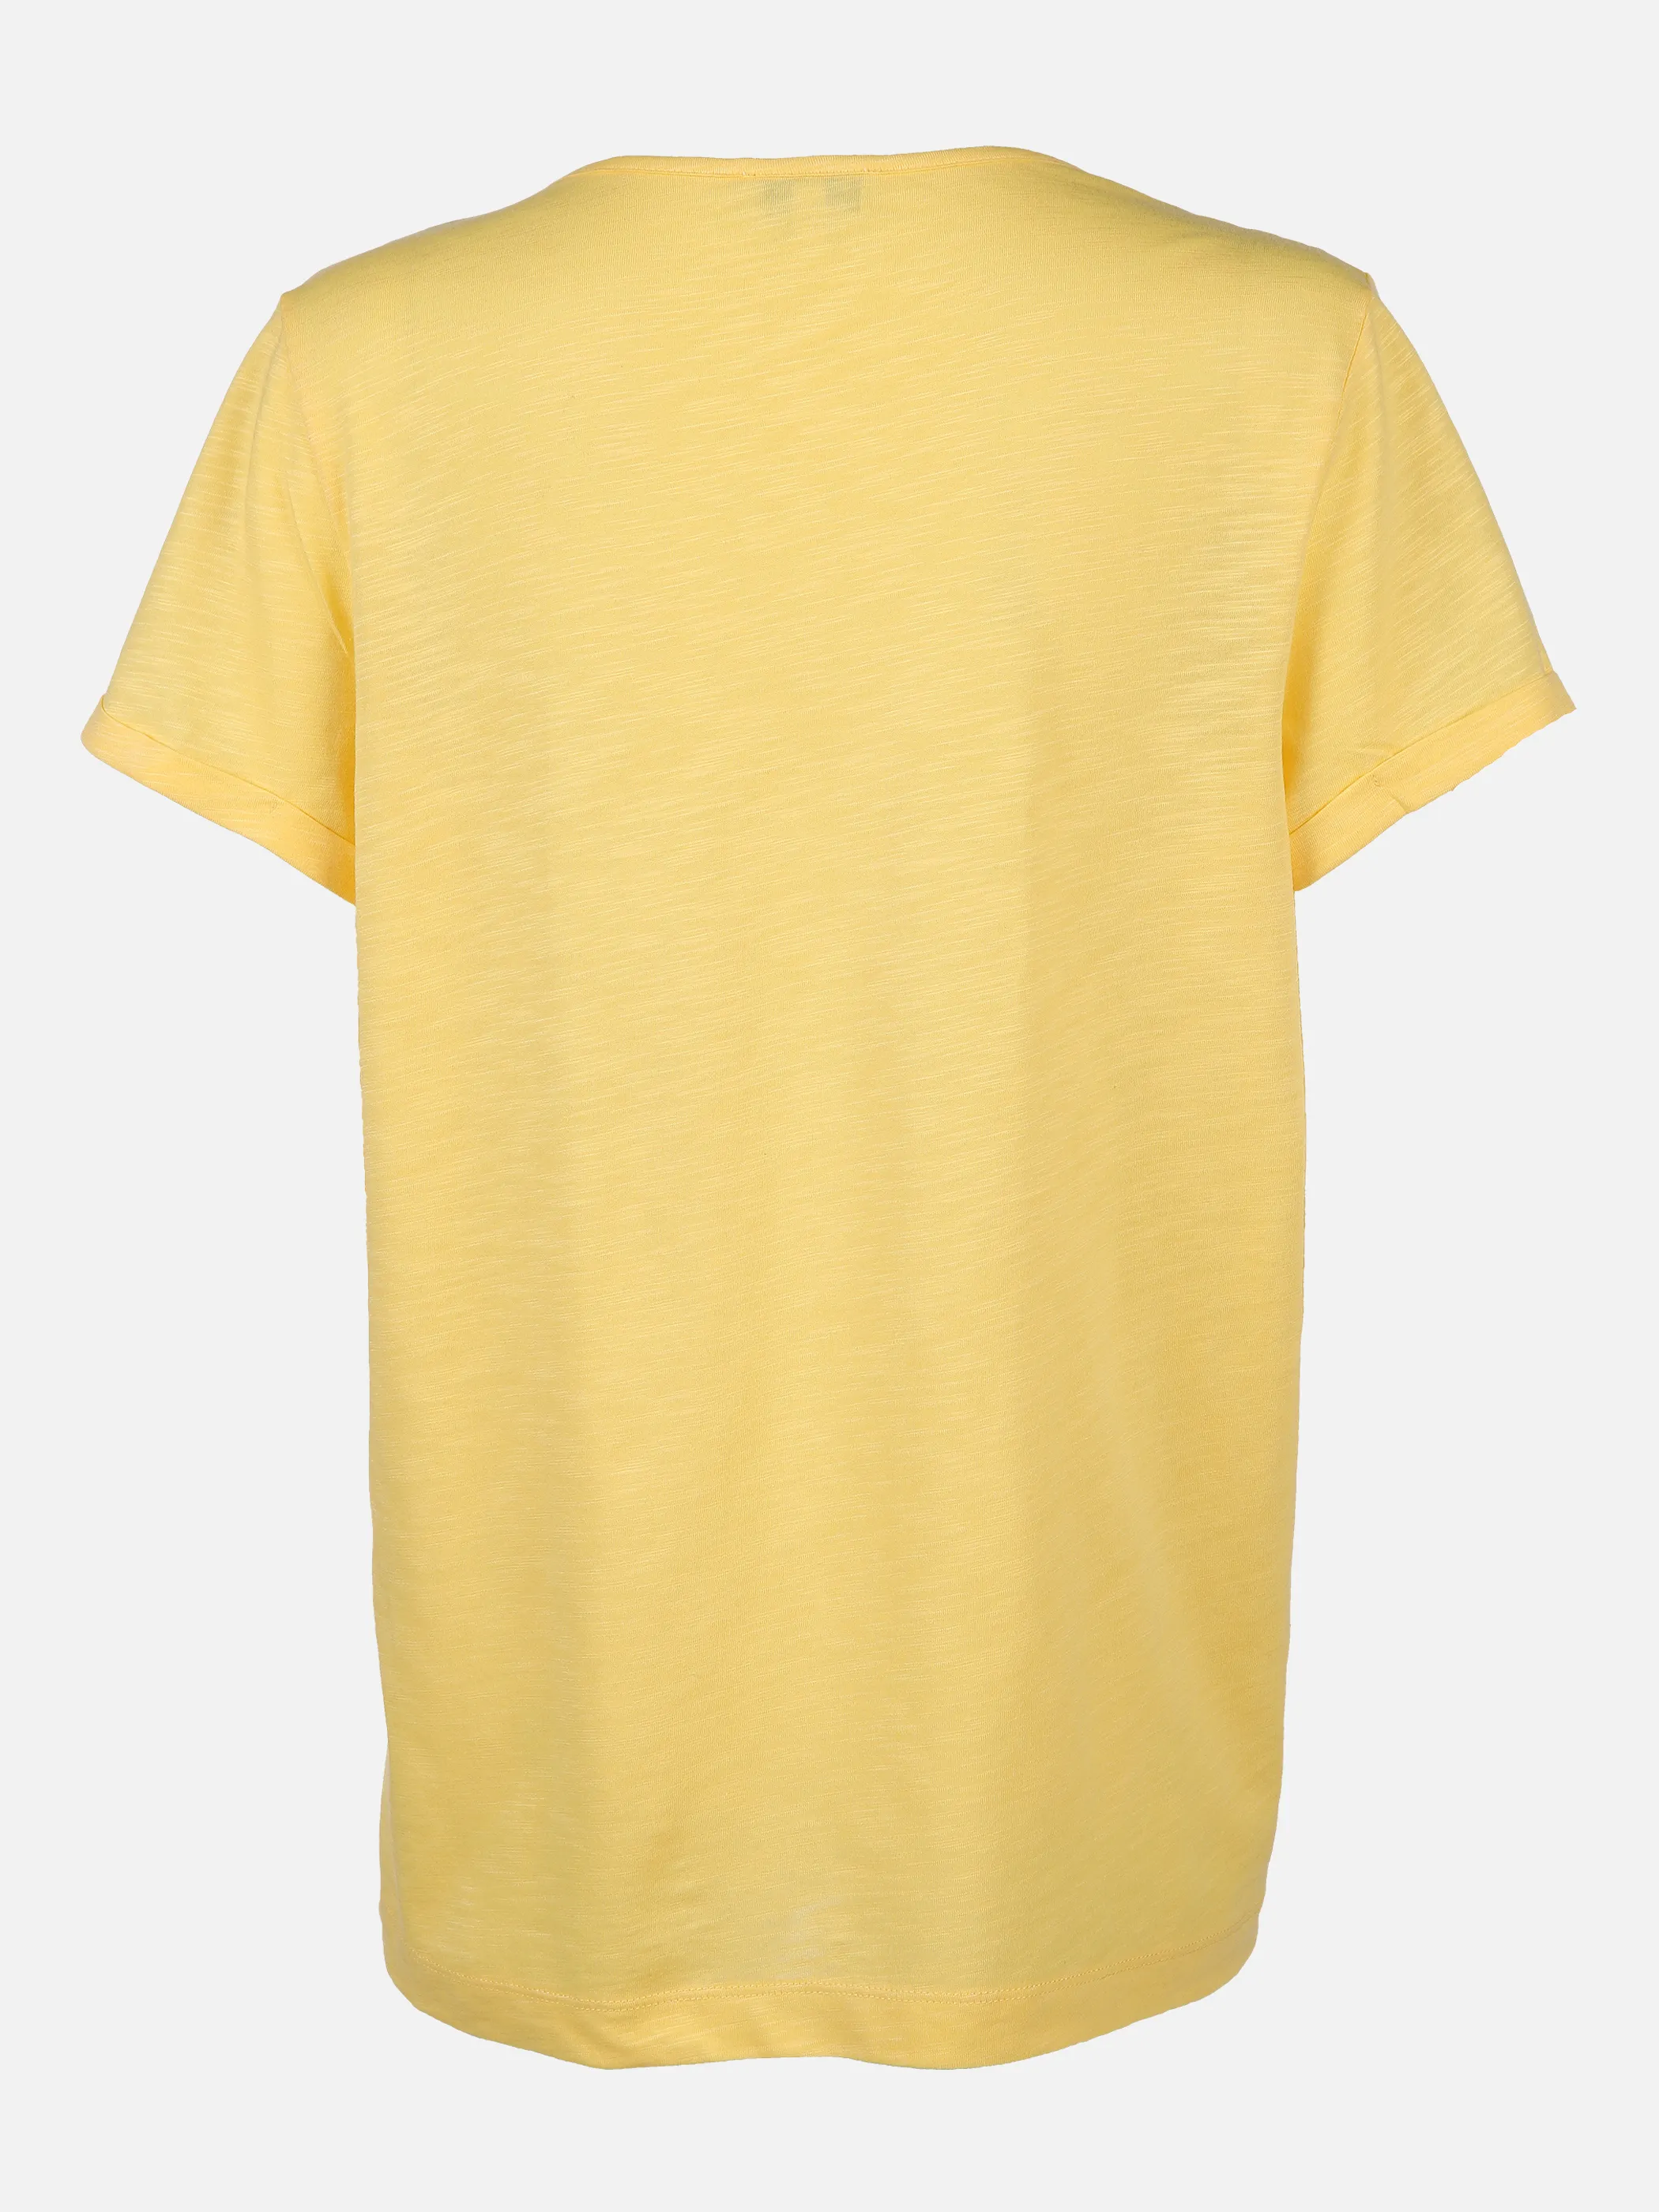 Lisa Tossa Da-Shirt mit Stickerei Gelb 812026 SUN YELLOW 2